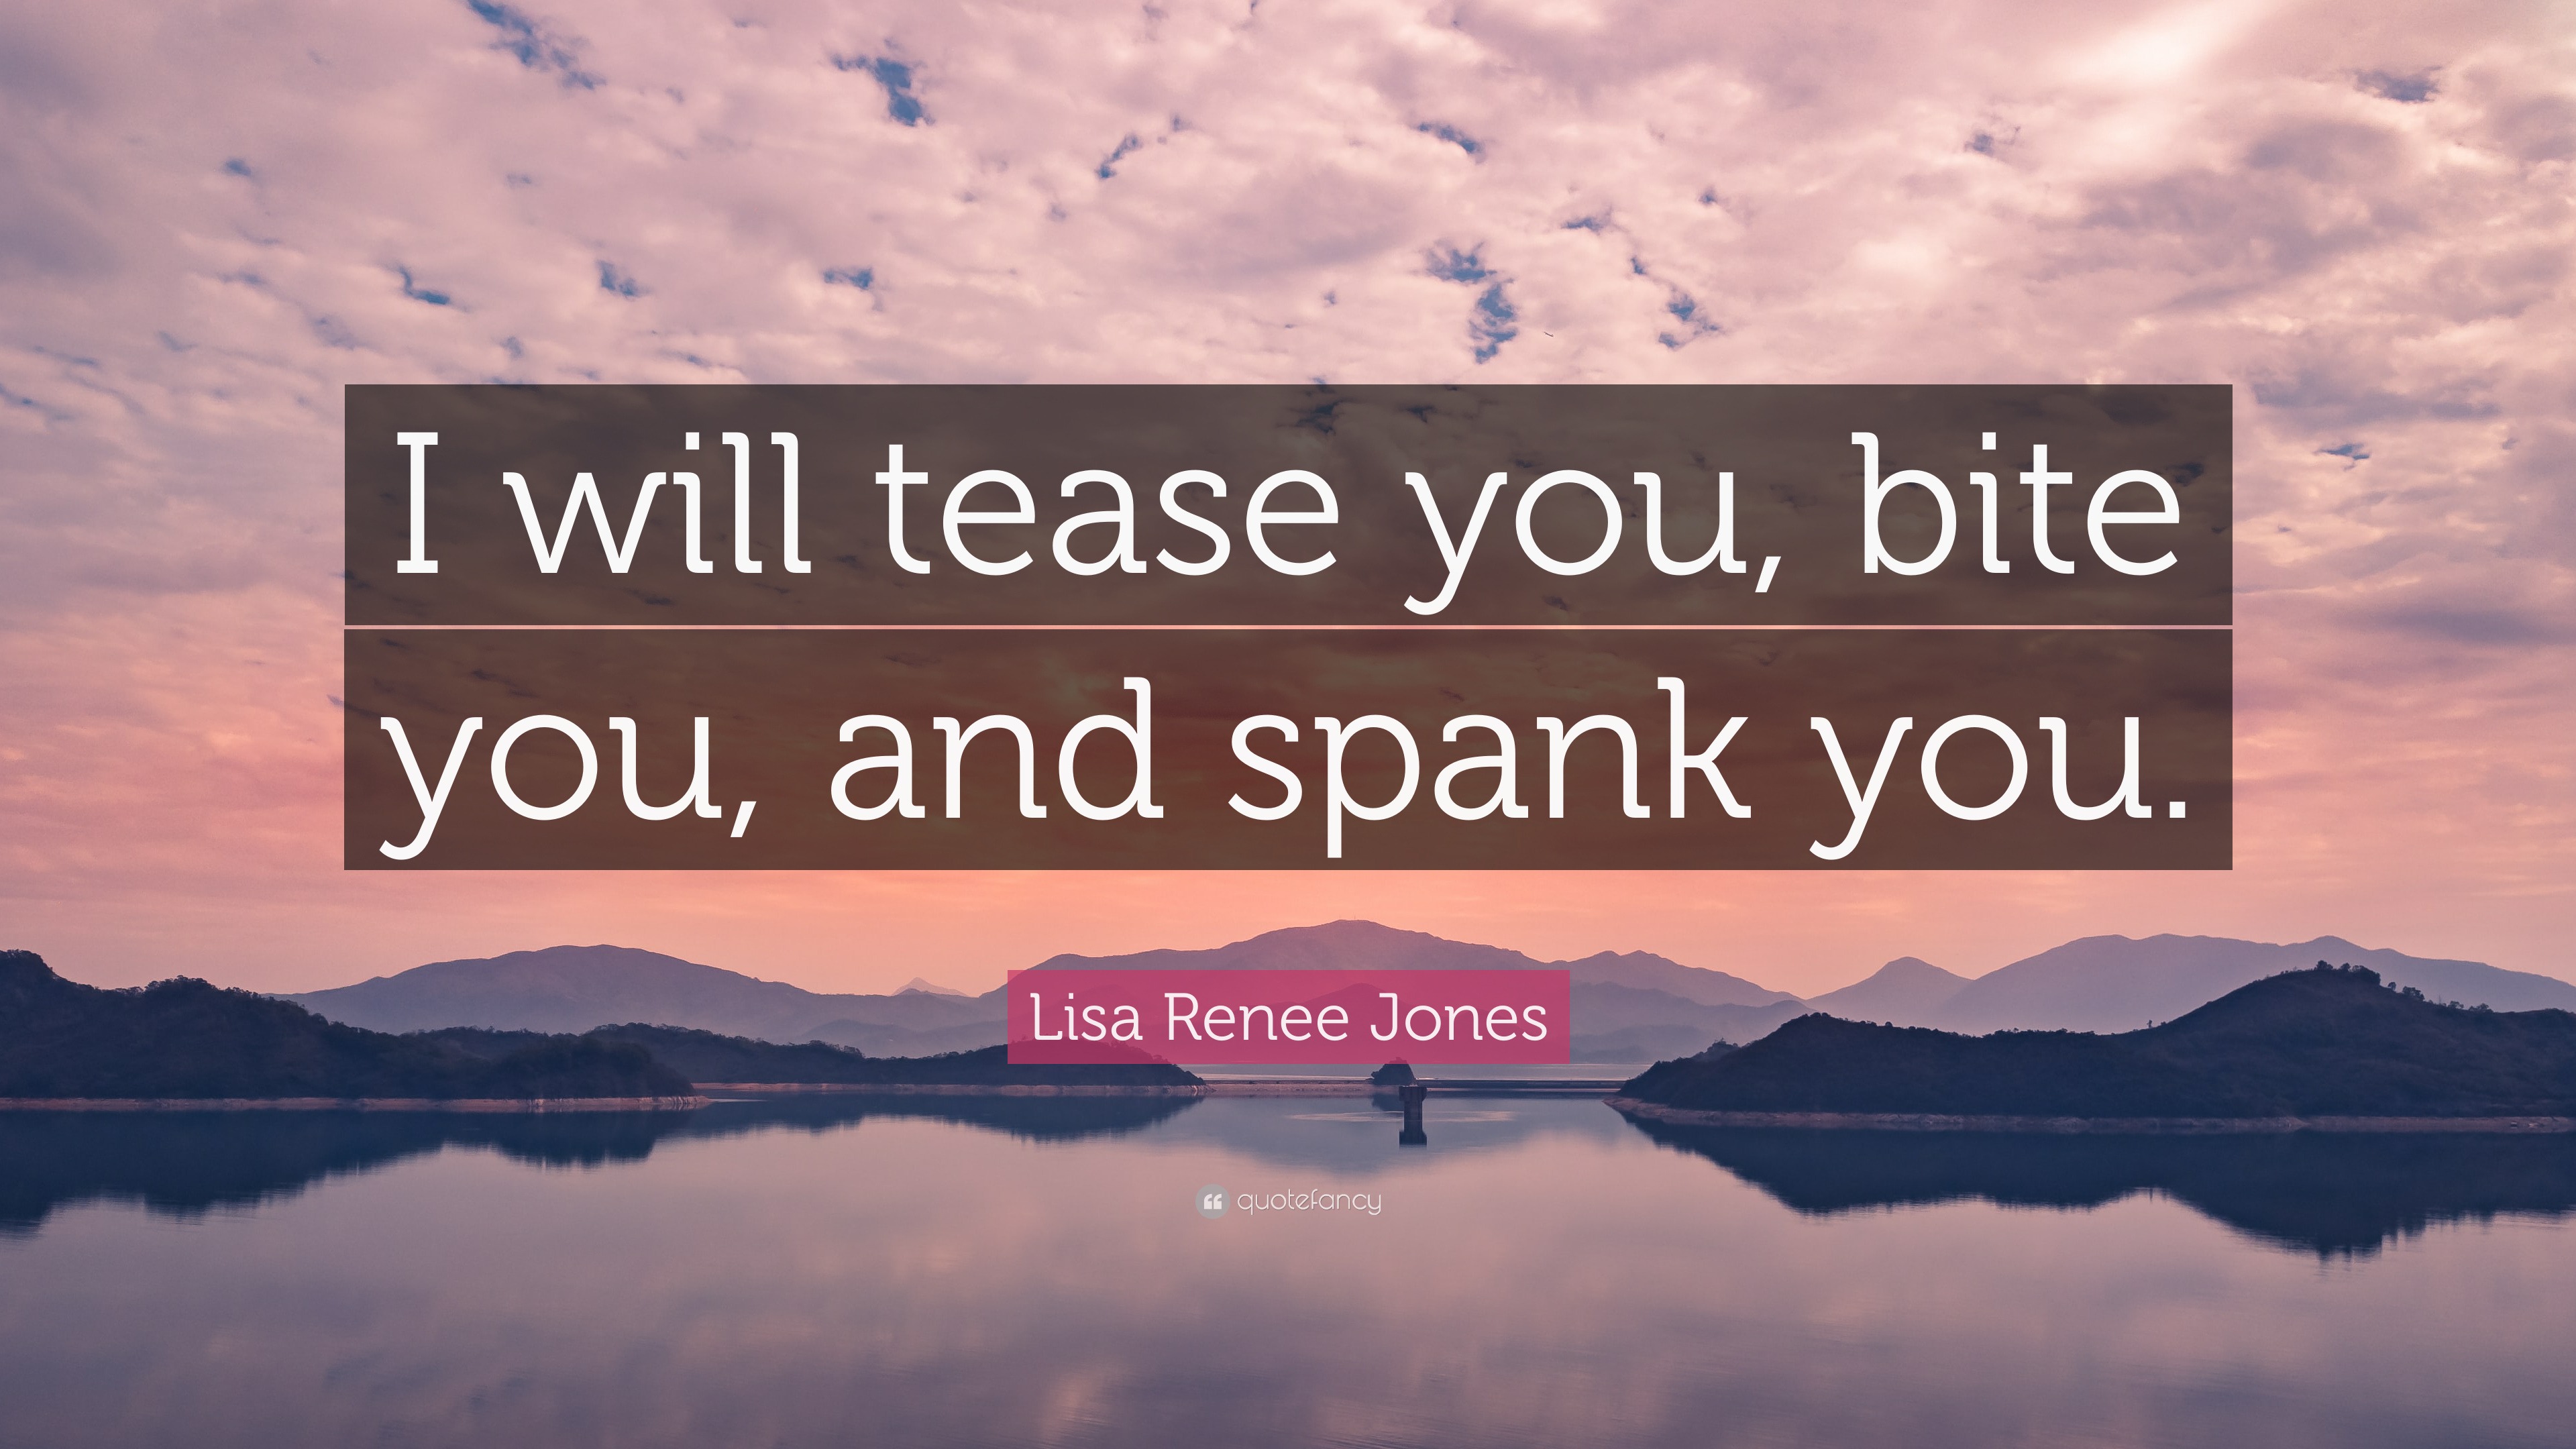 dekorere voksenalderen krøllet Lisa Renee Jones Quote: “I will tease you, bite you, and spank you.”